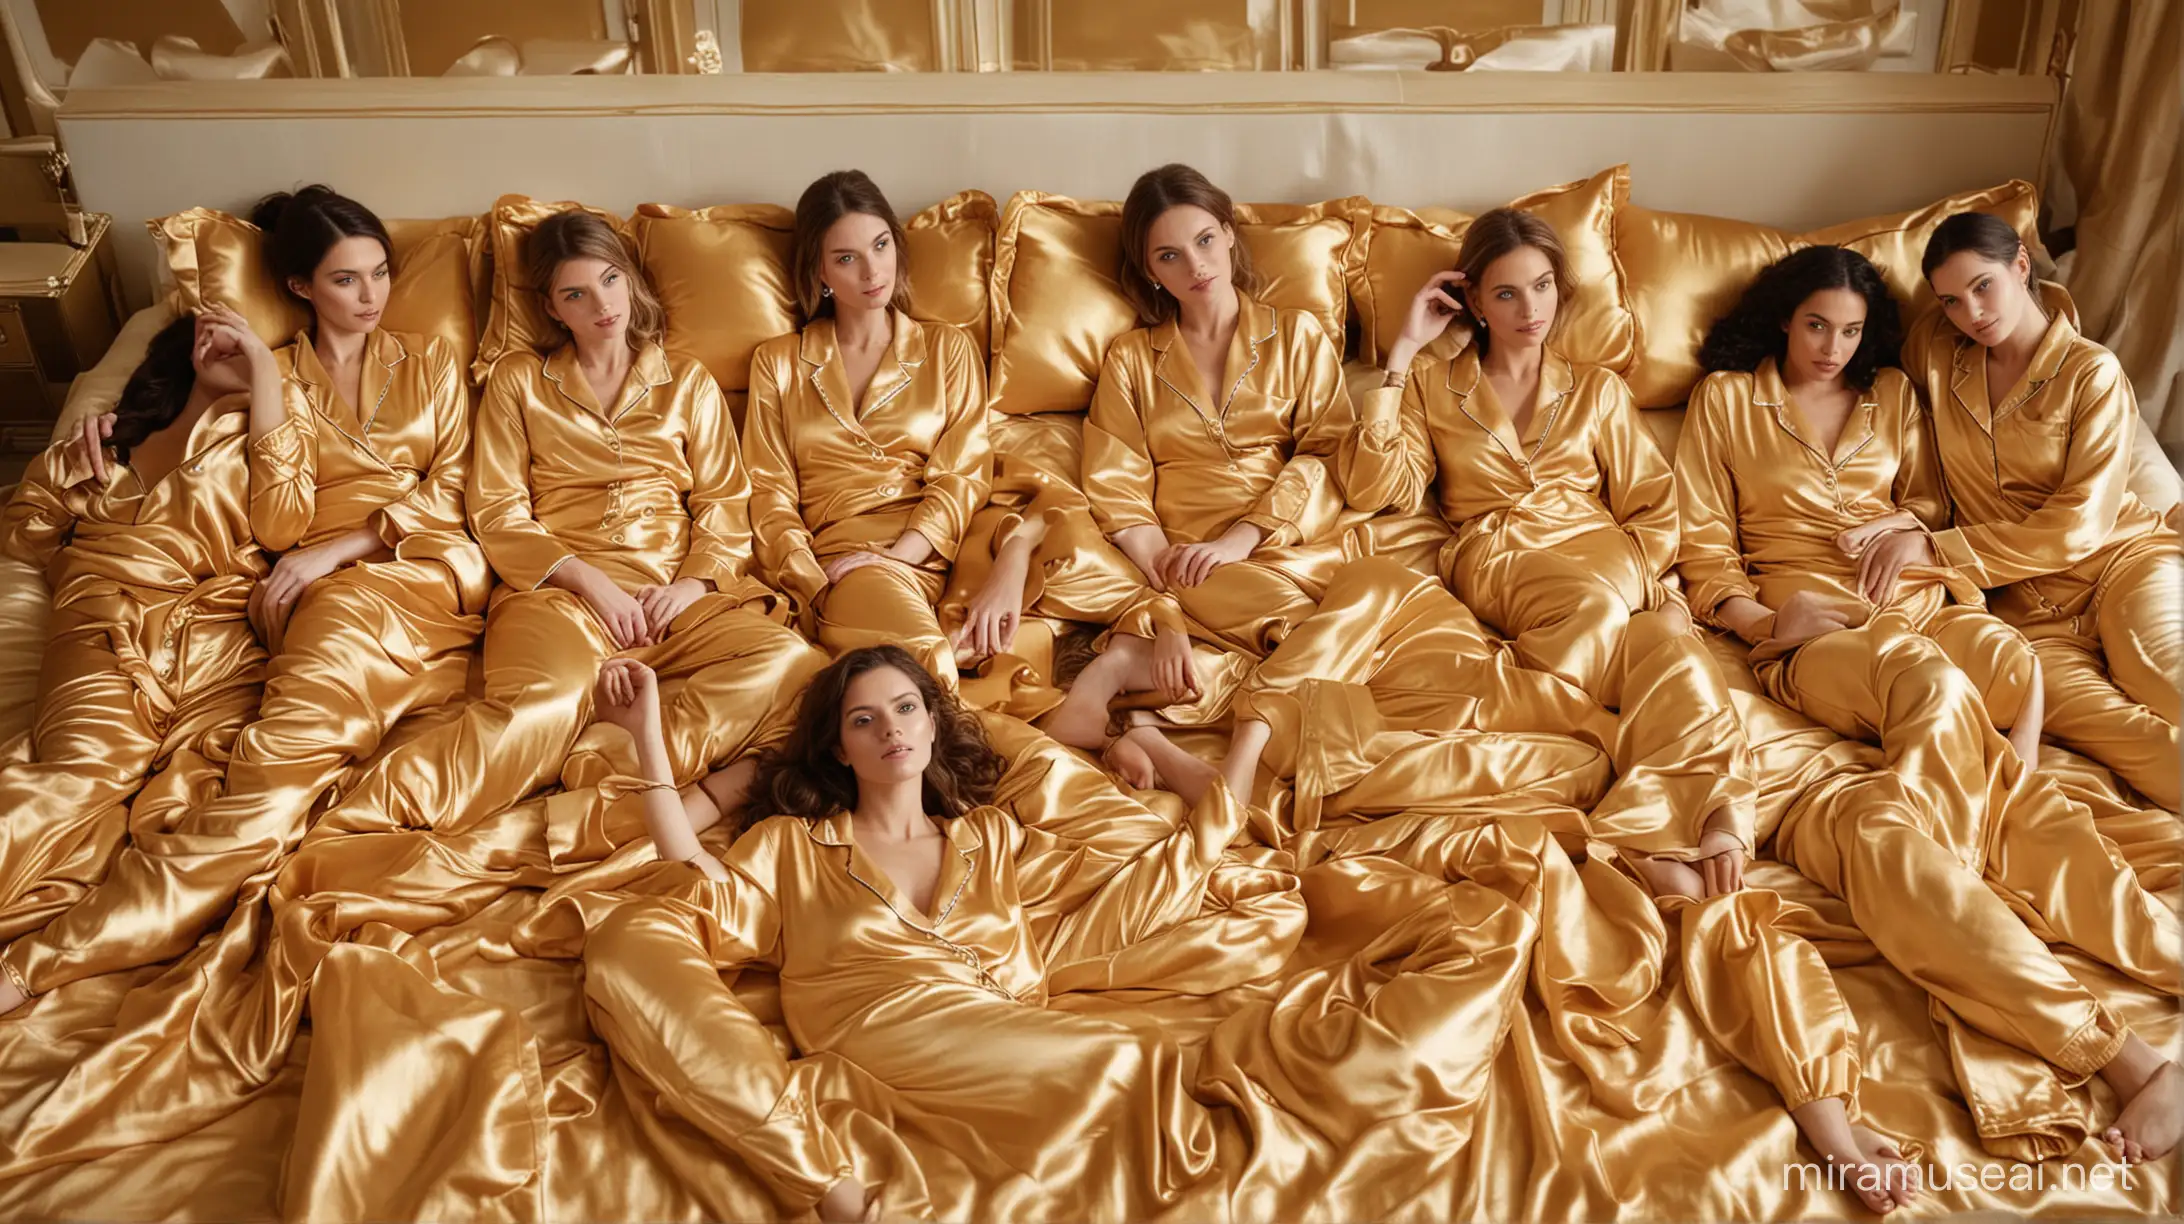 50 women in gold satin pajamas lying on satin beds